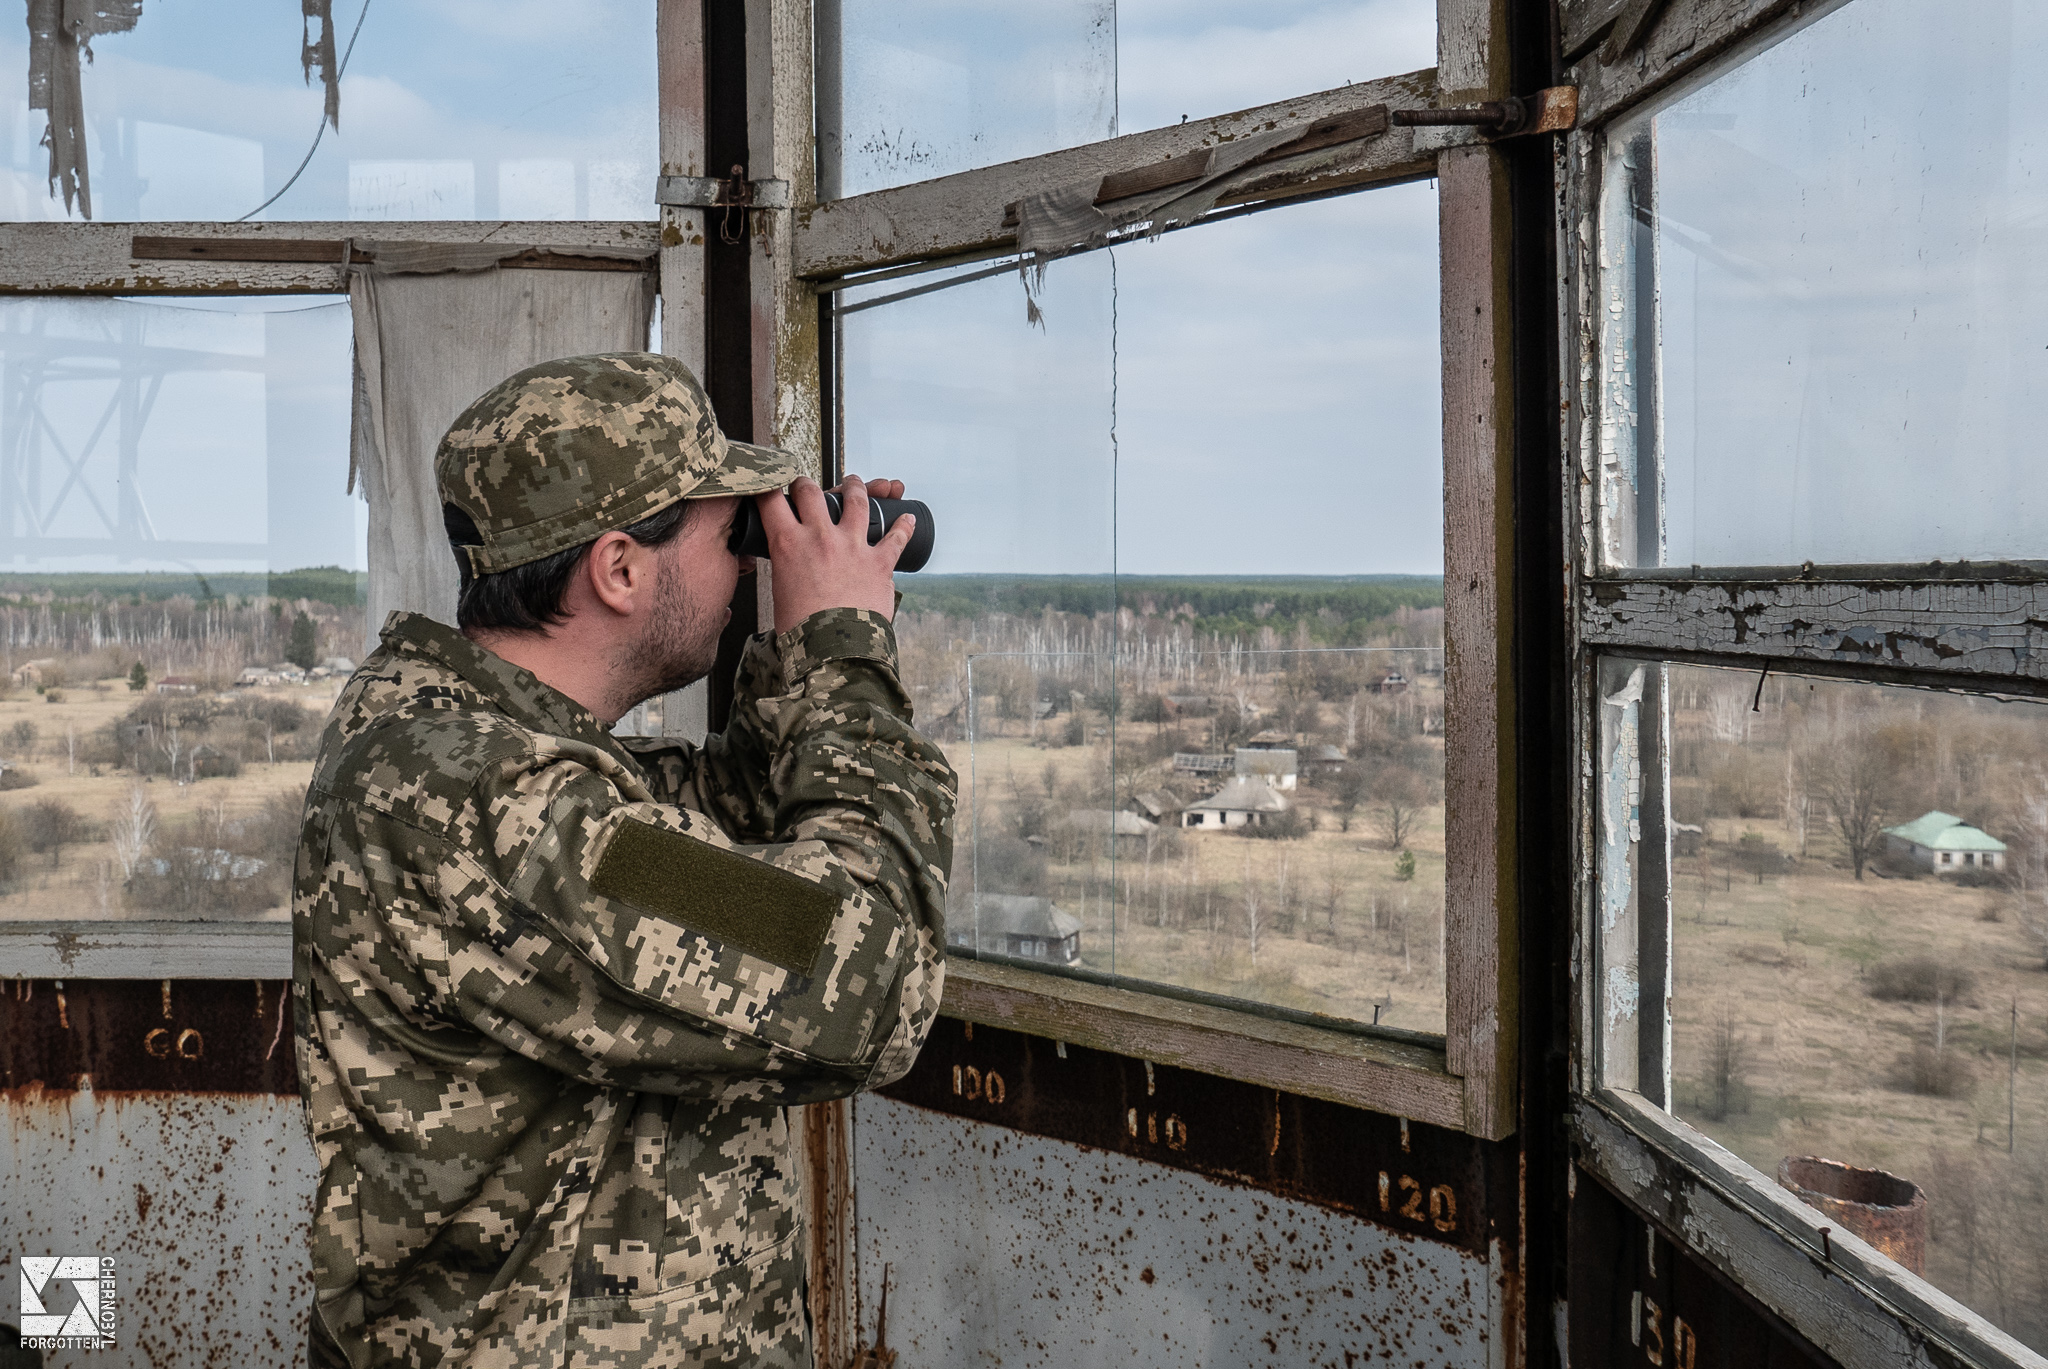 Chernobyl Zone Fire Lookout Tower in Paryshev village